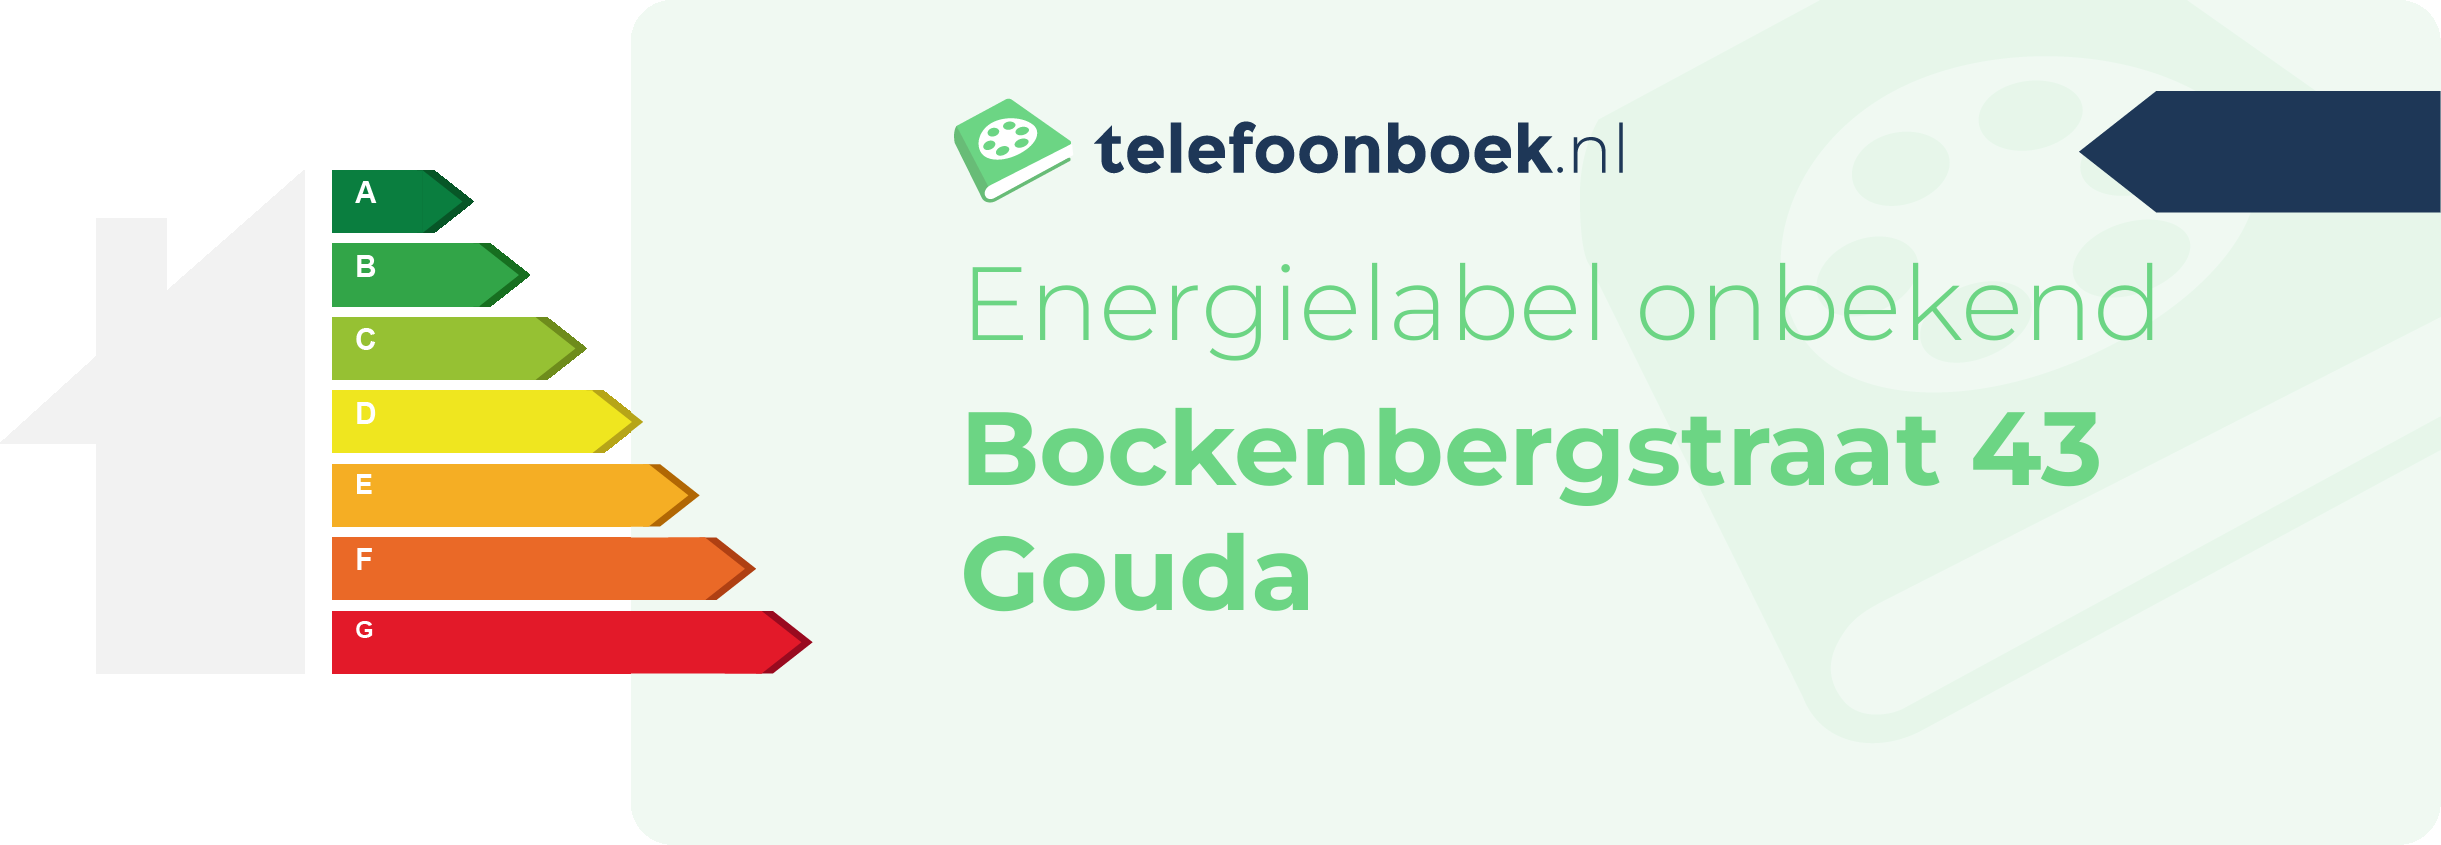 Energielabel Bockenbergstraat 43 Gouda